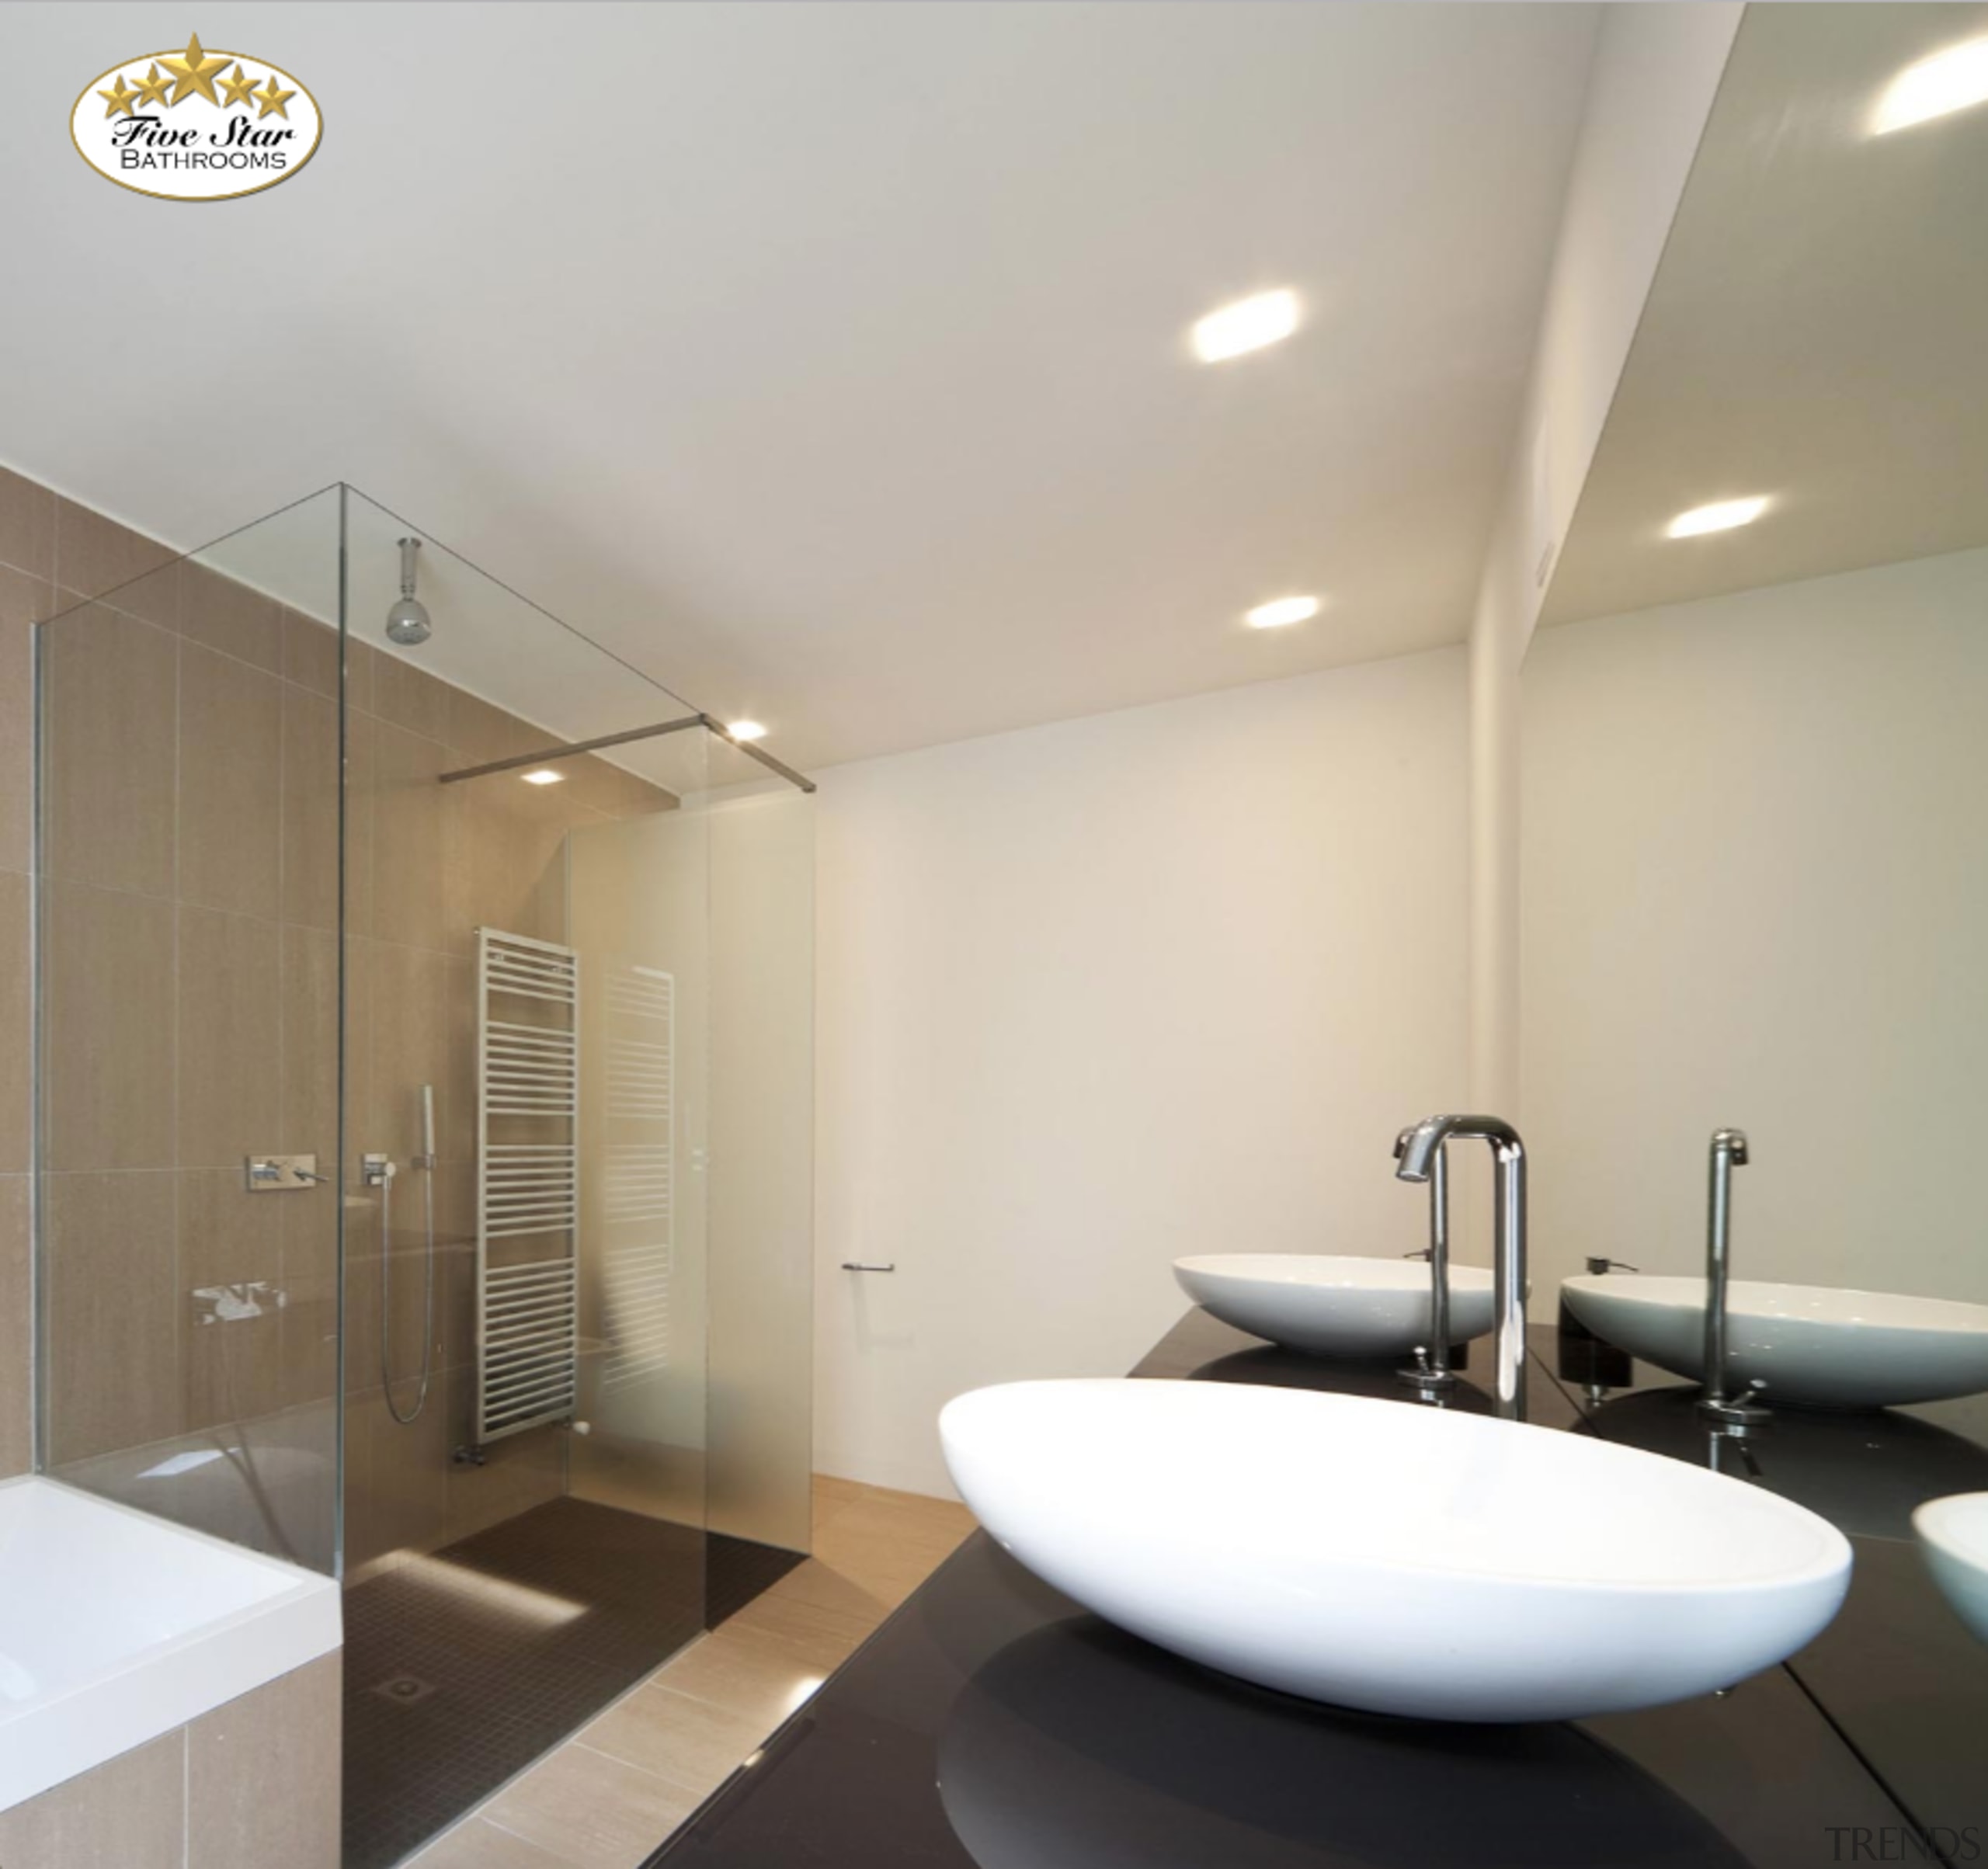 Bathroom by Five Star Bathrooms architecture, bathroom, ceiling, interior design, property, real estate, sink, gray